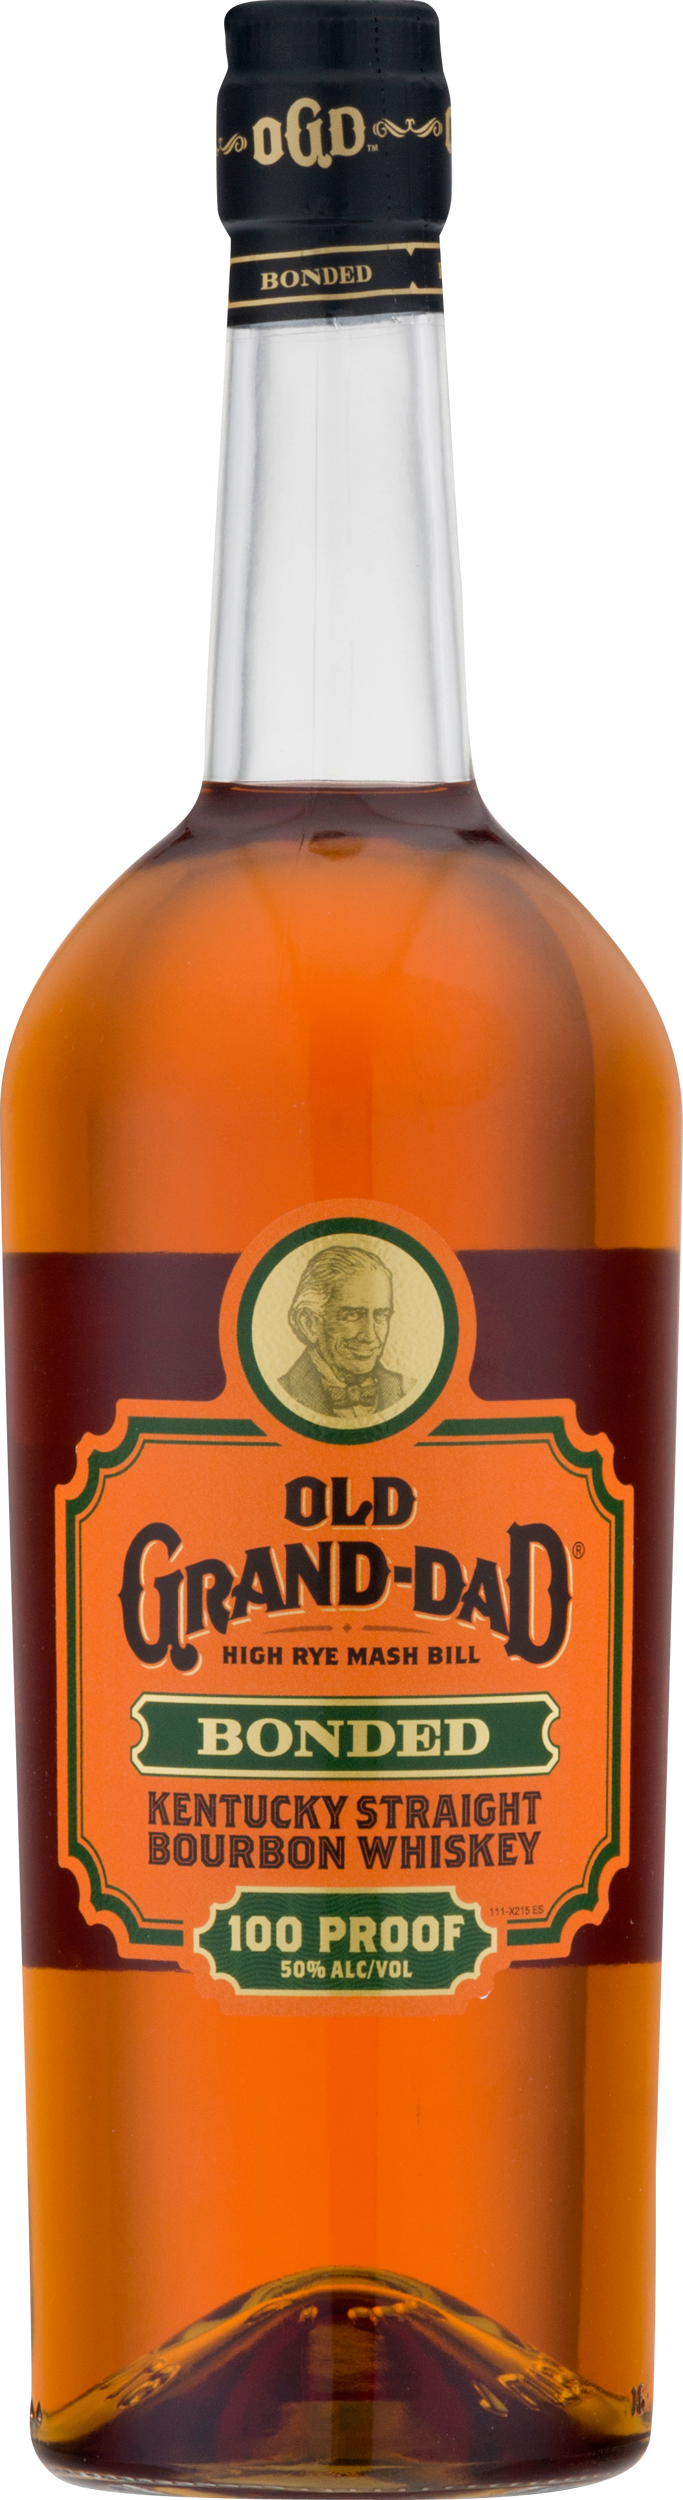 Old Grand Dad Bonded Bourbon Whiskey Bottle PNG